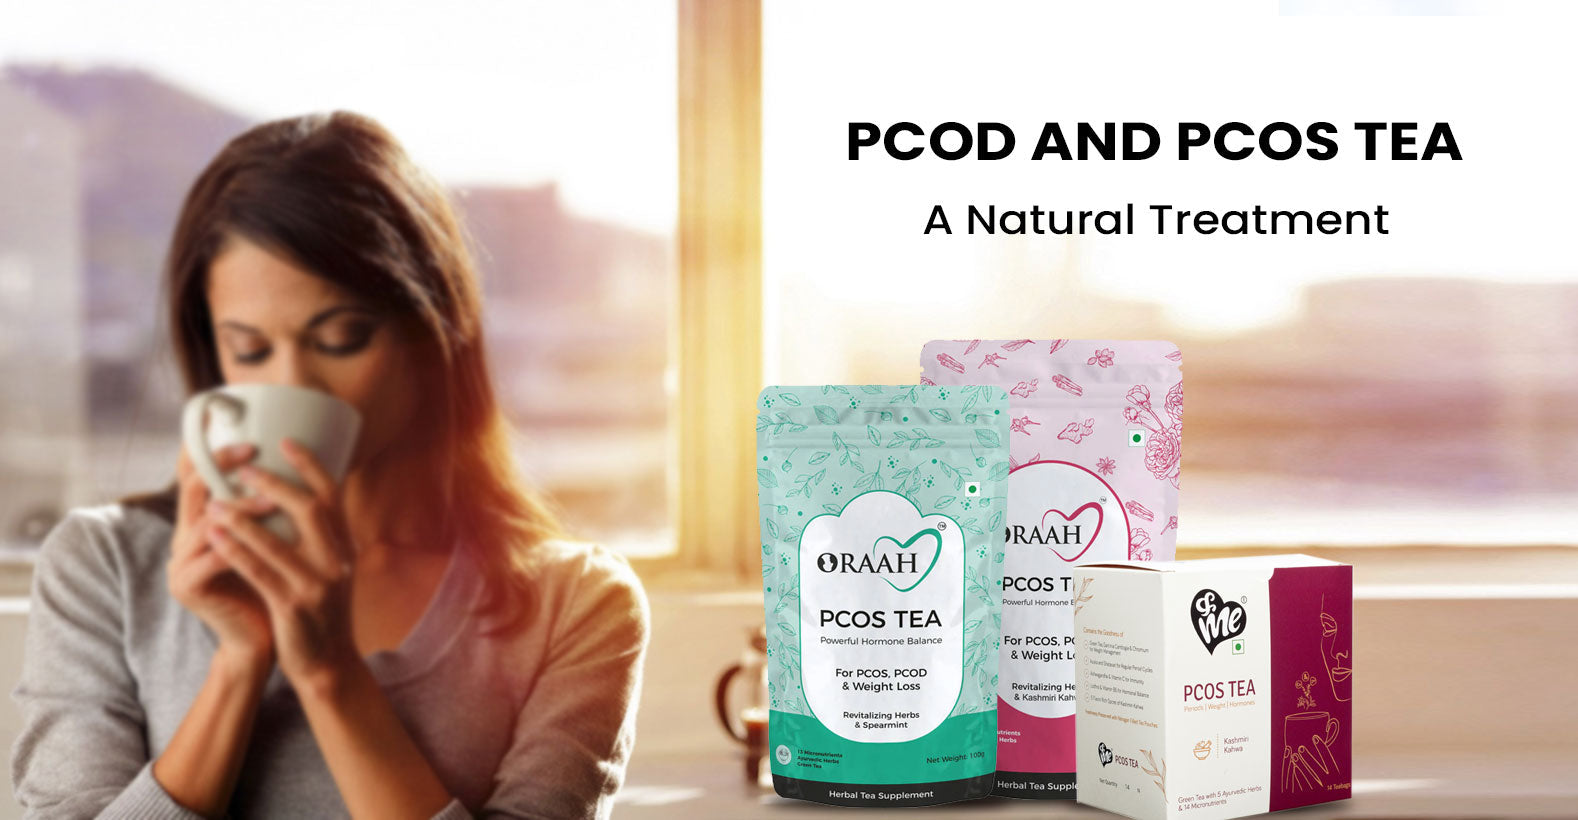 PCOS  PCOD Tea - A Natural Treatment